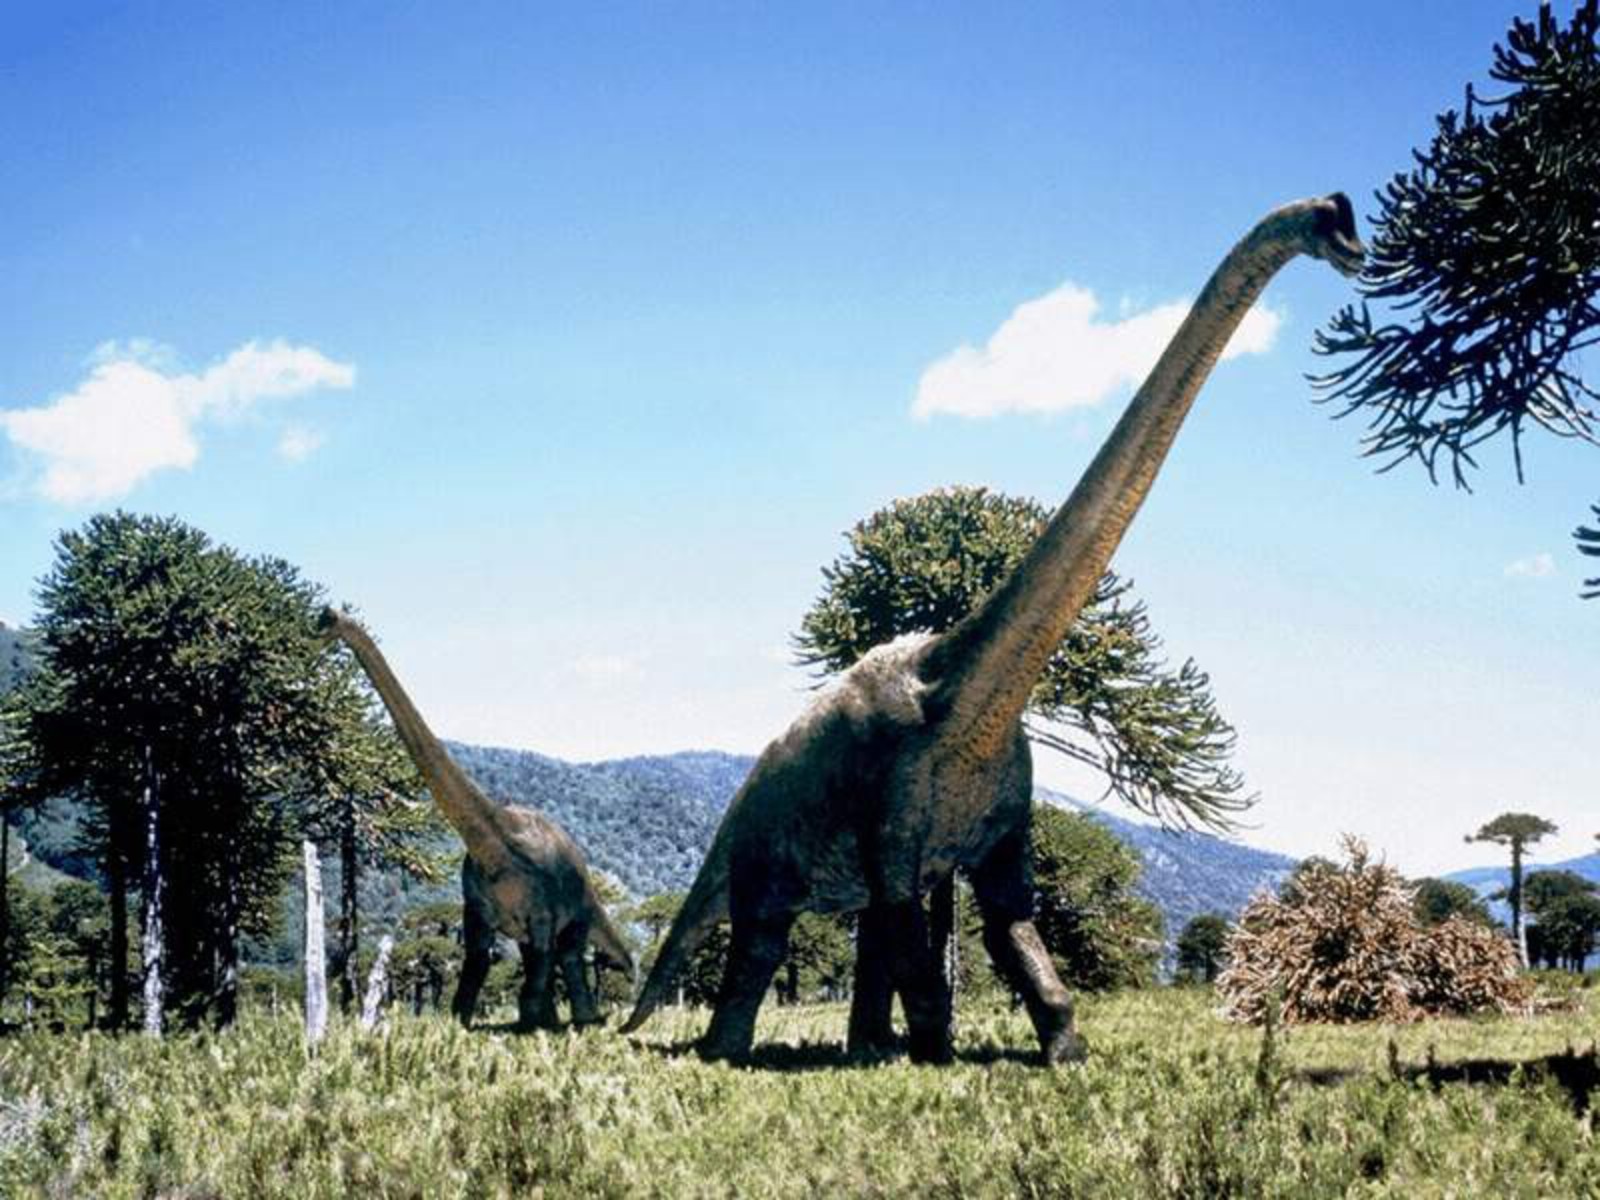 A mighty dinosaur roaming through a prehistoric landscape.